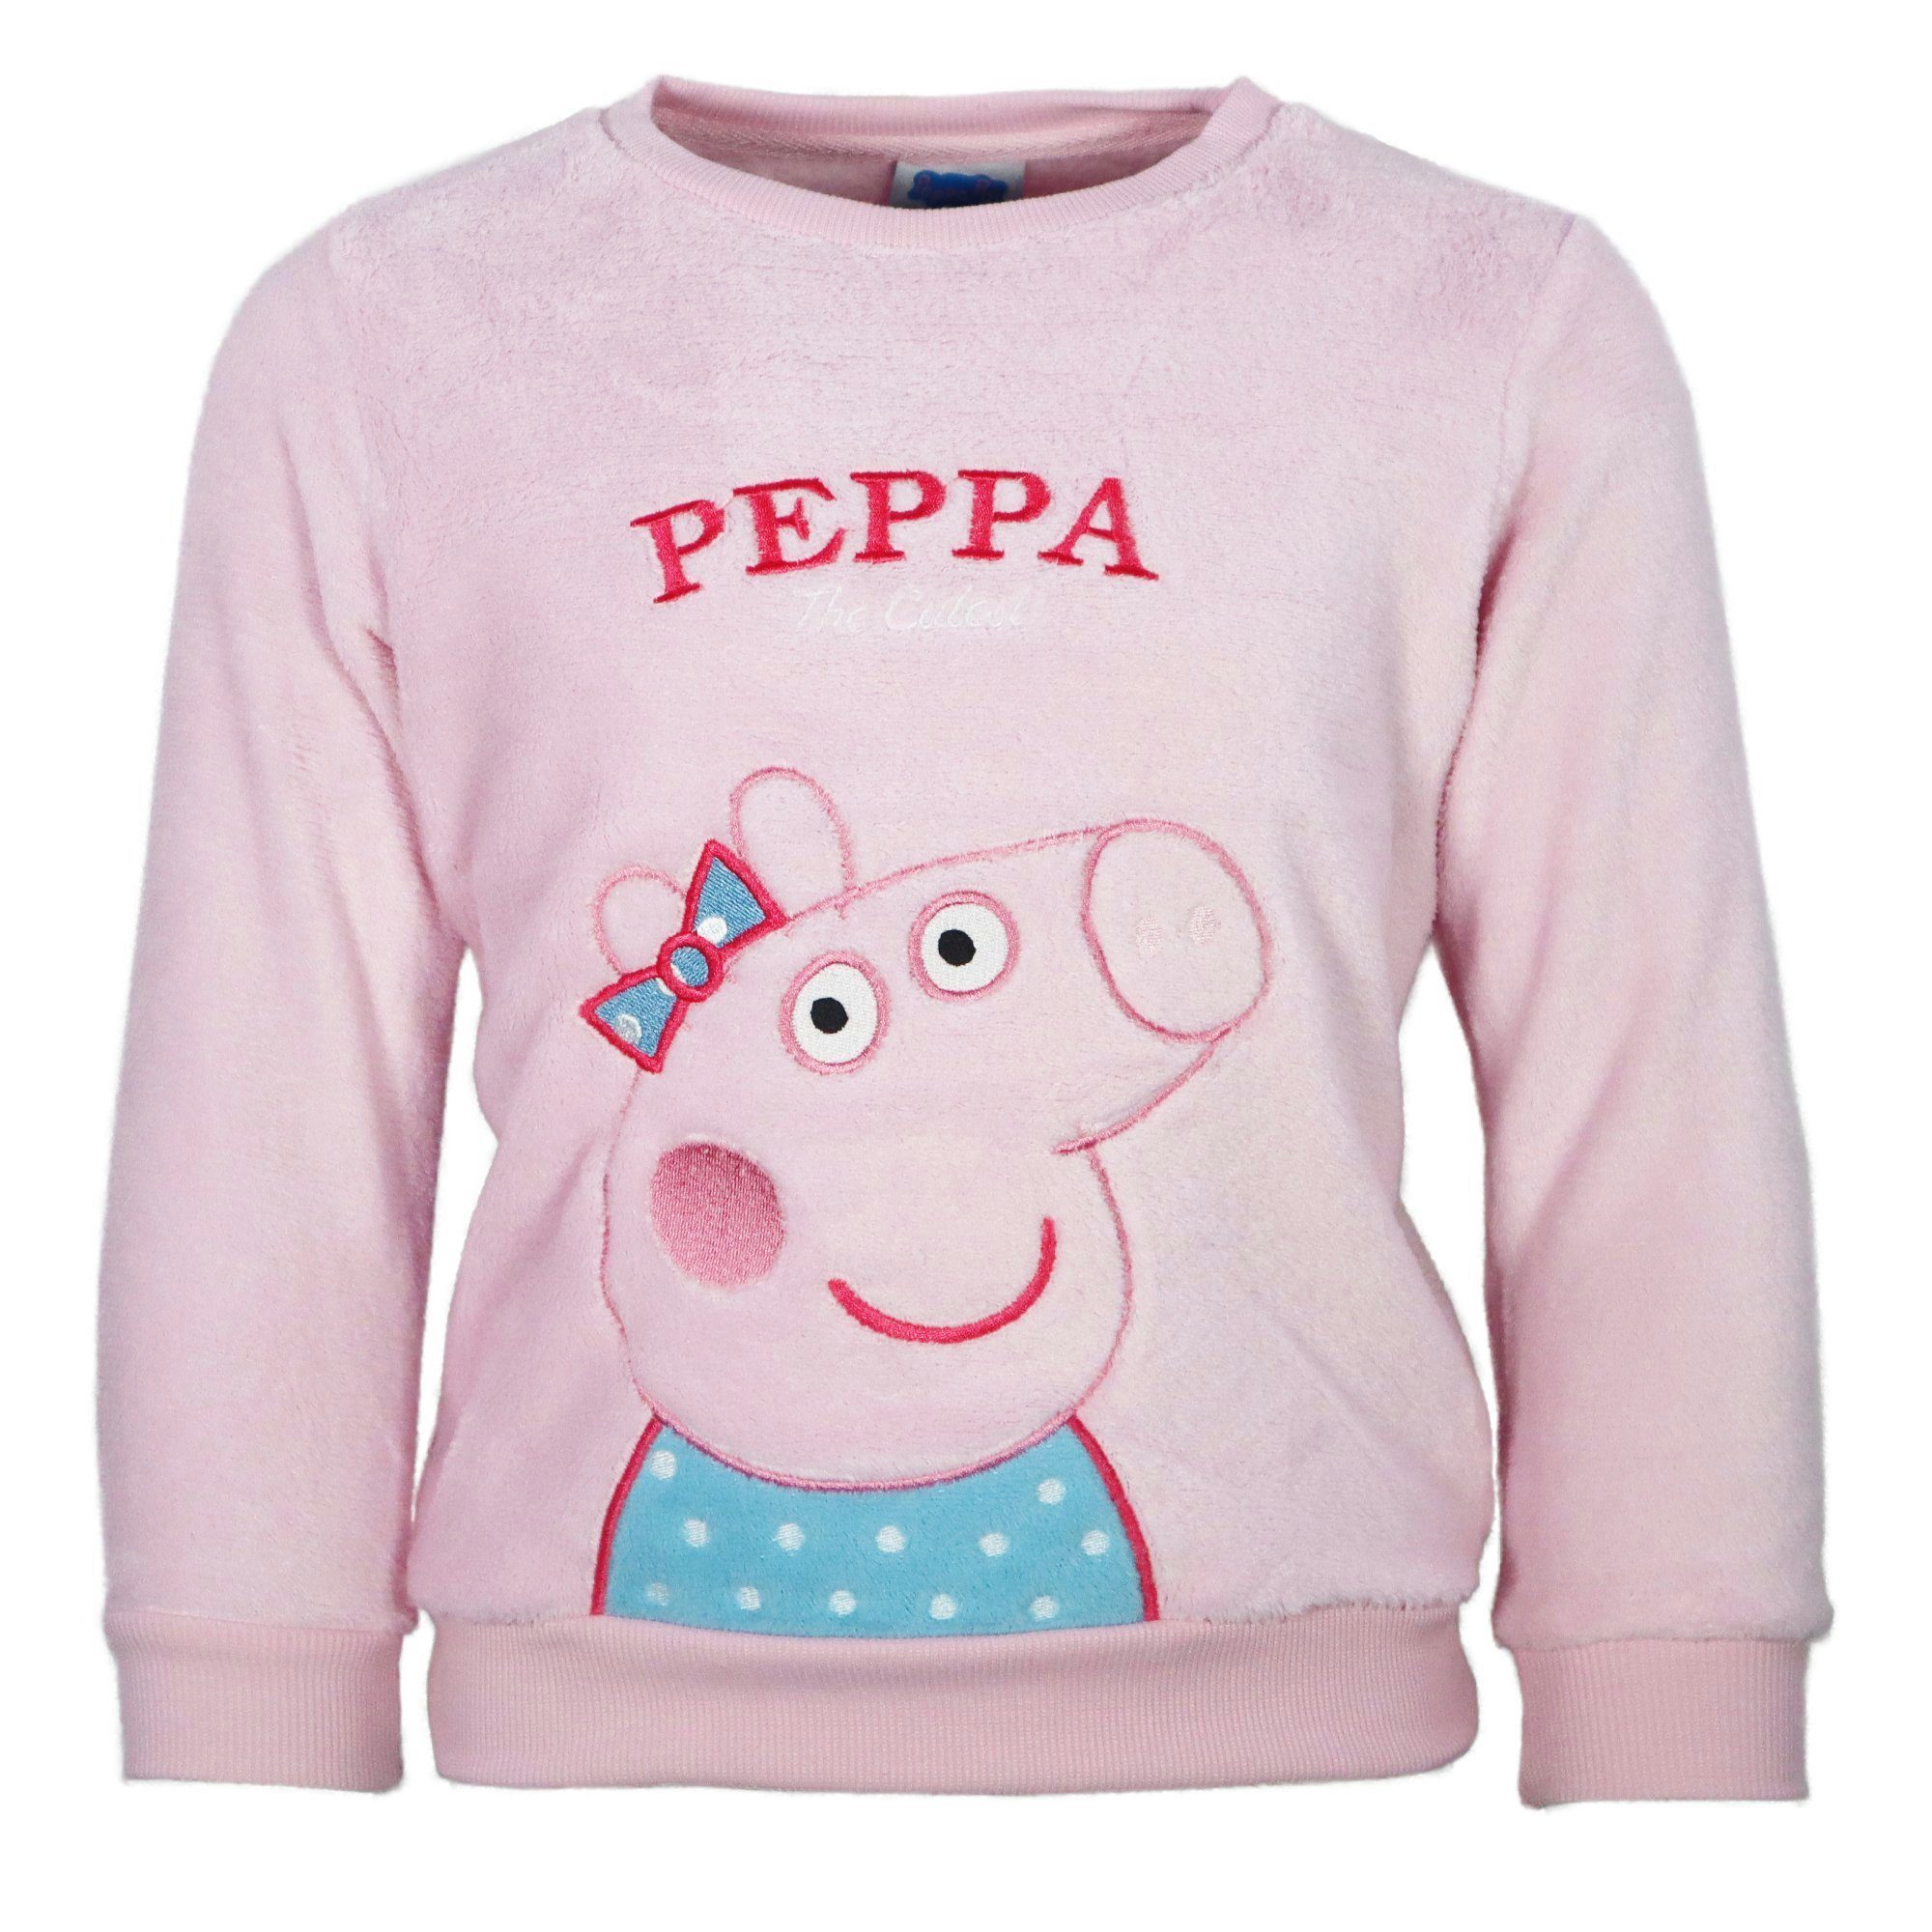 Coral Fleece Pig Wutz 98 Mädchen bis Sweater Peppa Pulli Pullover 116 Peppa Pig Gr. Kinder